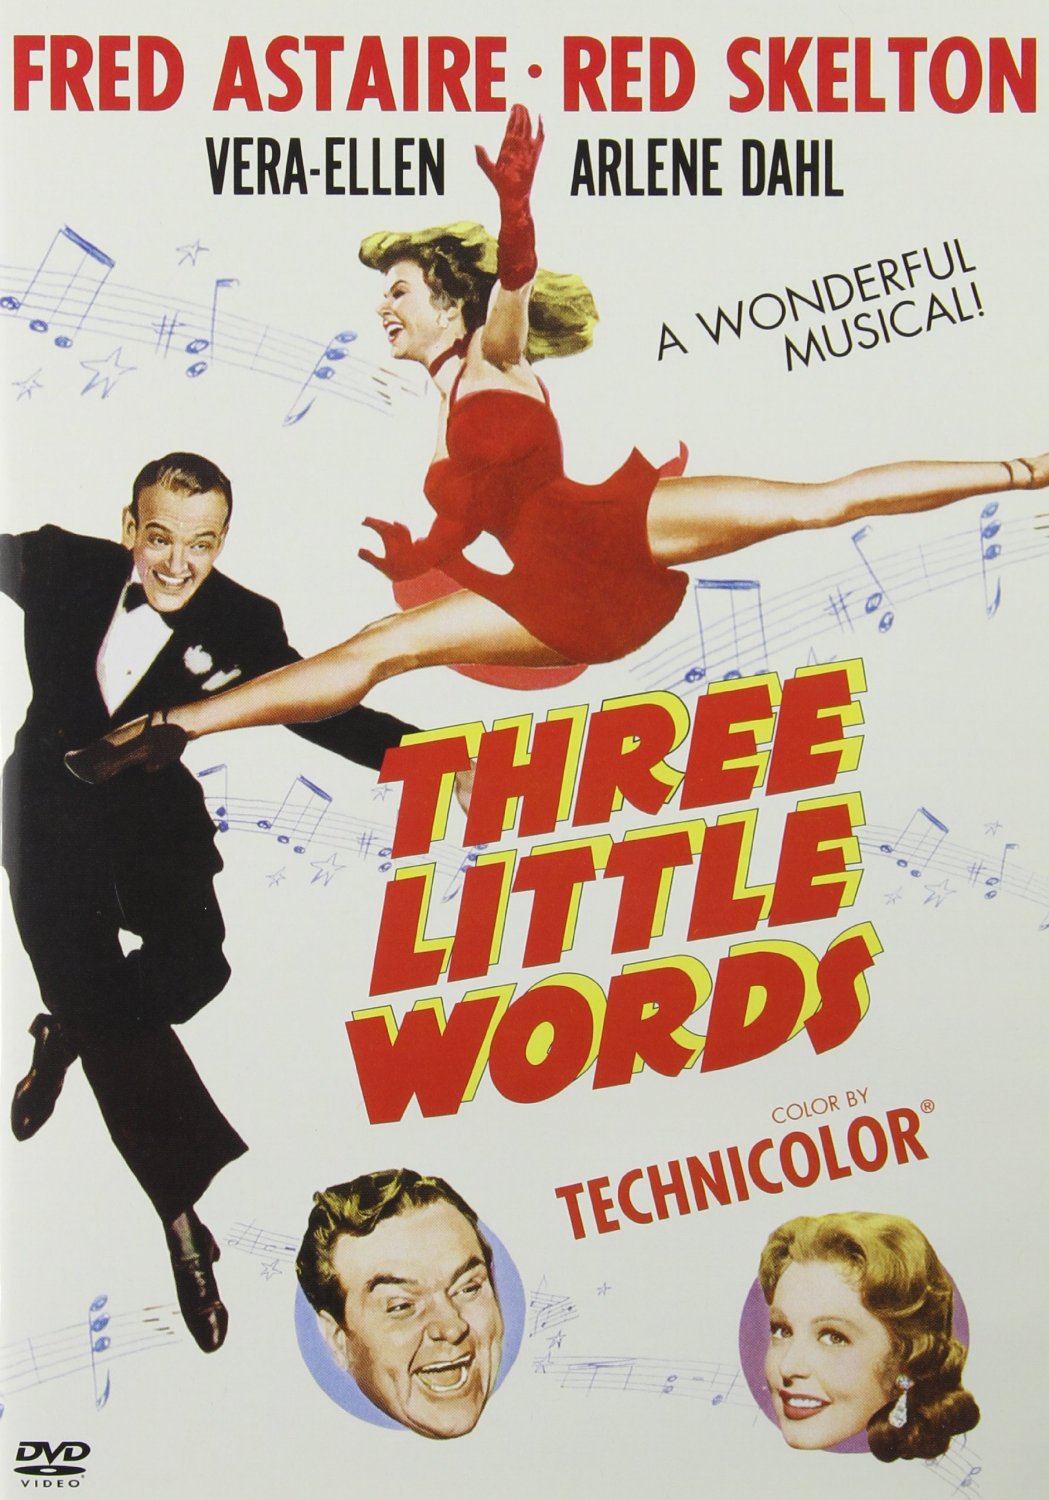 Three Little Words (1950) starring Red Skelton, Fred Astaire, Vera-Ellen, Arlene Dahl